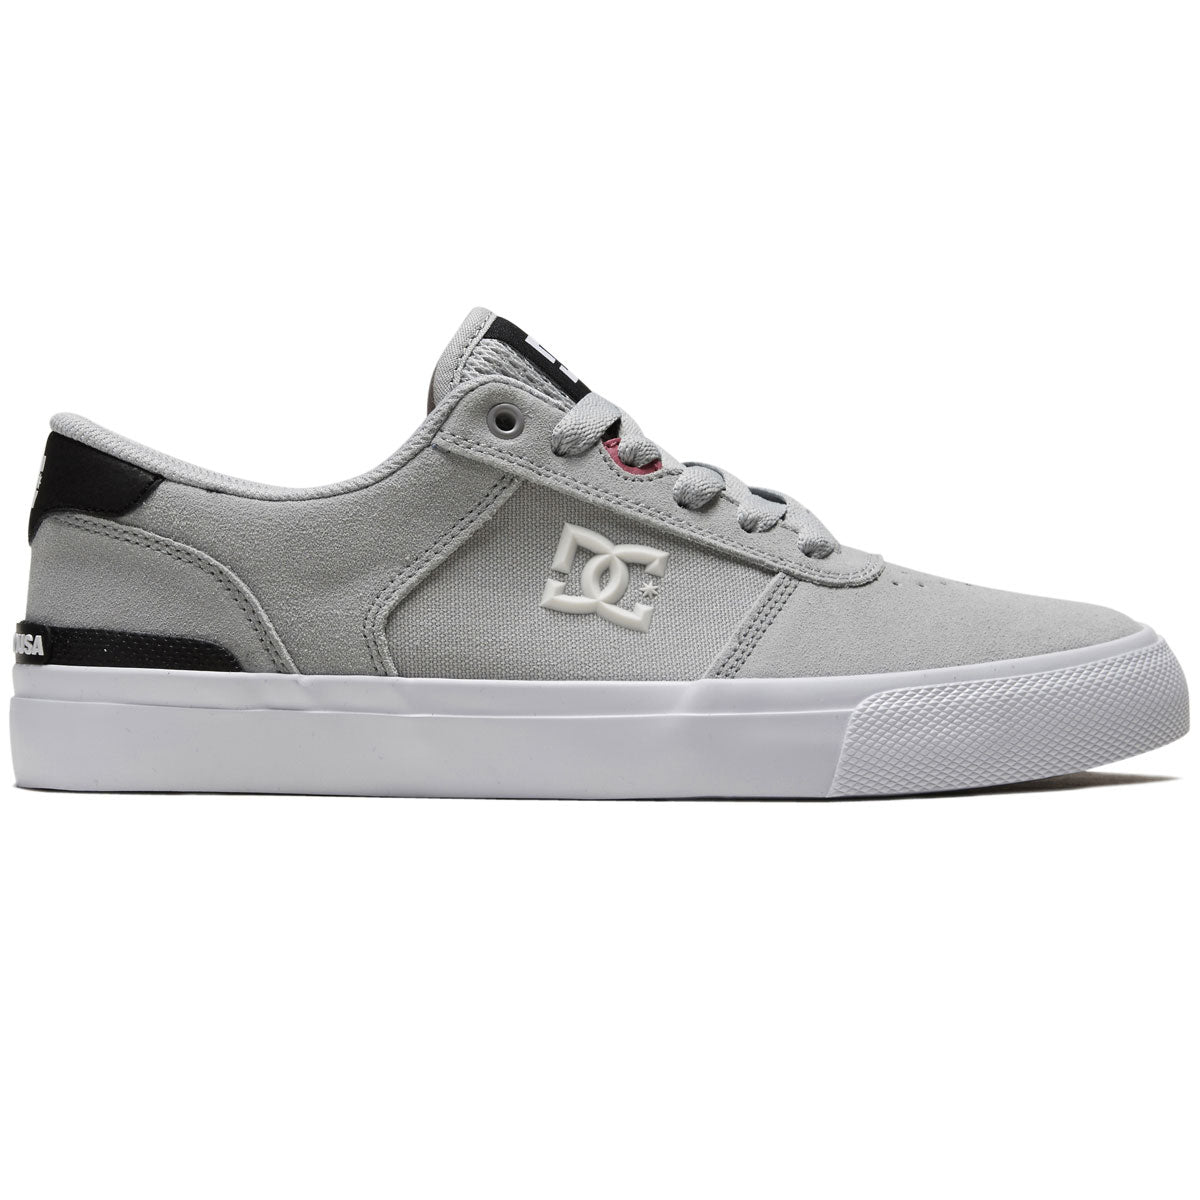 DC Teknic S Shoes - Grey/Black image 1